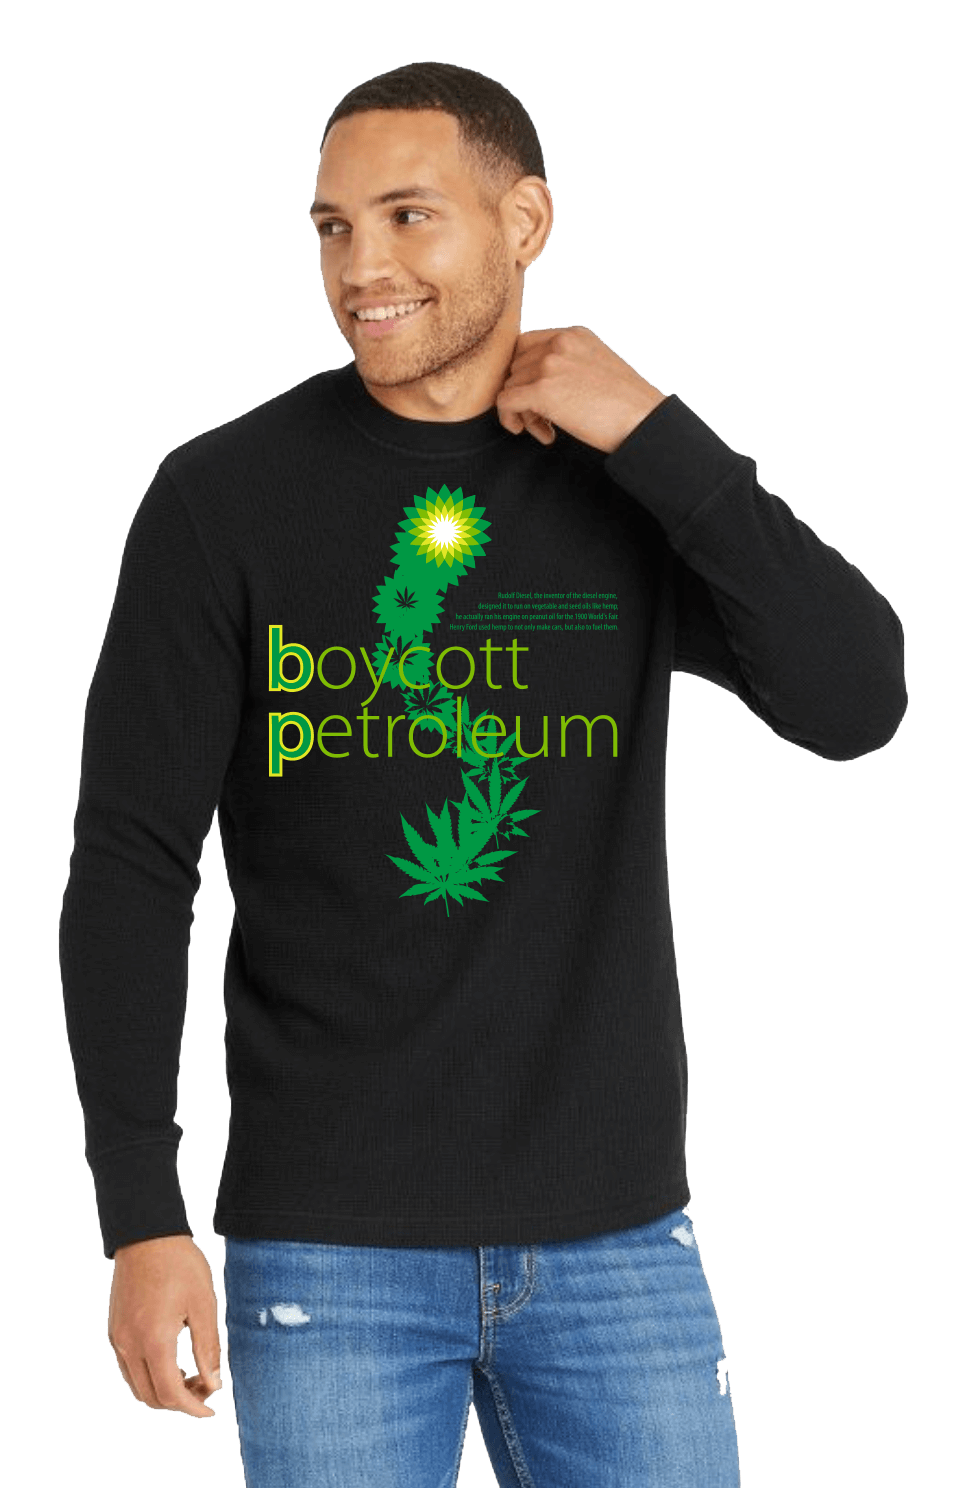 Boycott Petroleum T-Shirt